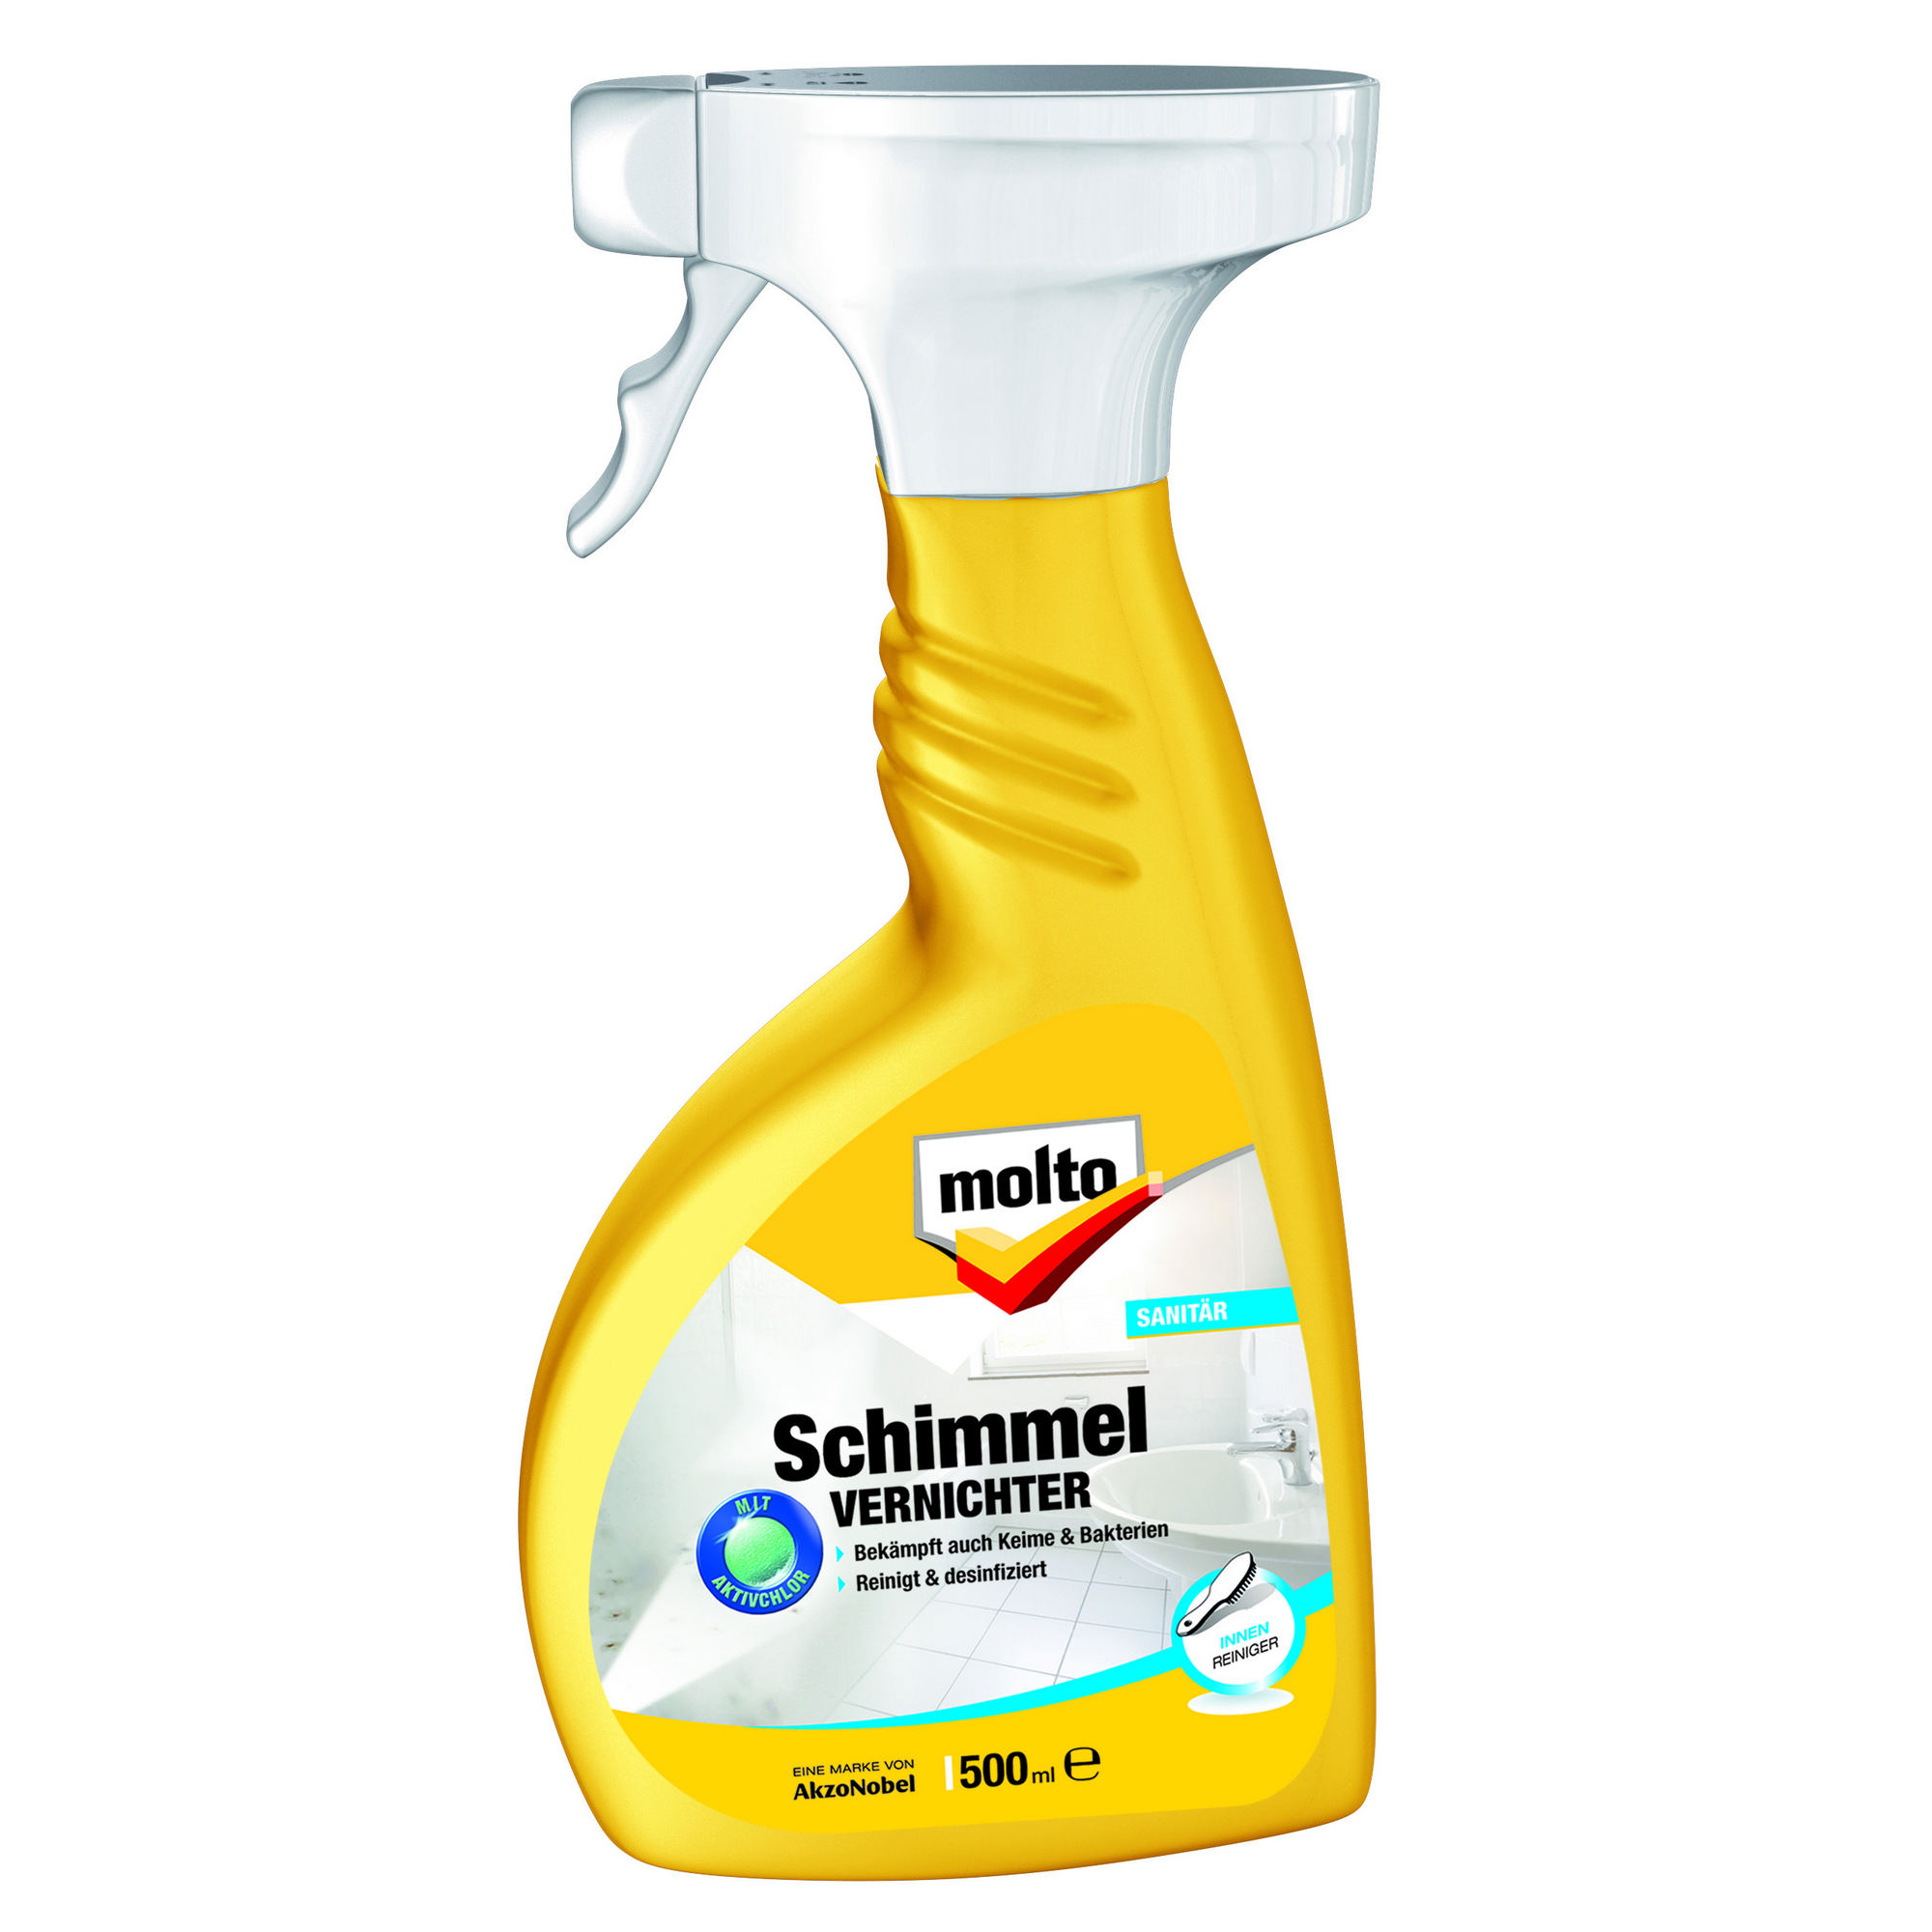 Molto Schimmel-Vernichter Sanitär 500 ml + product picture